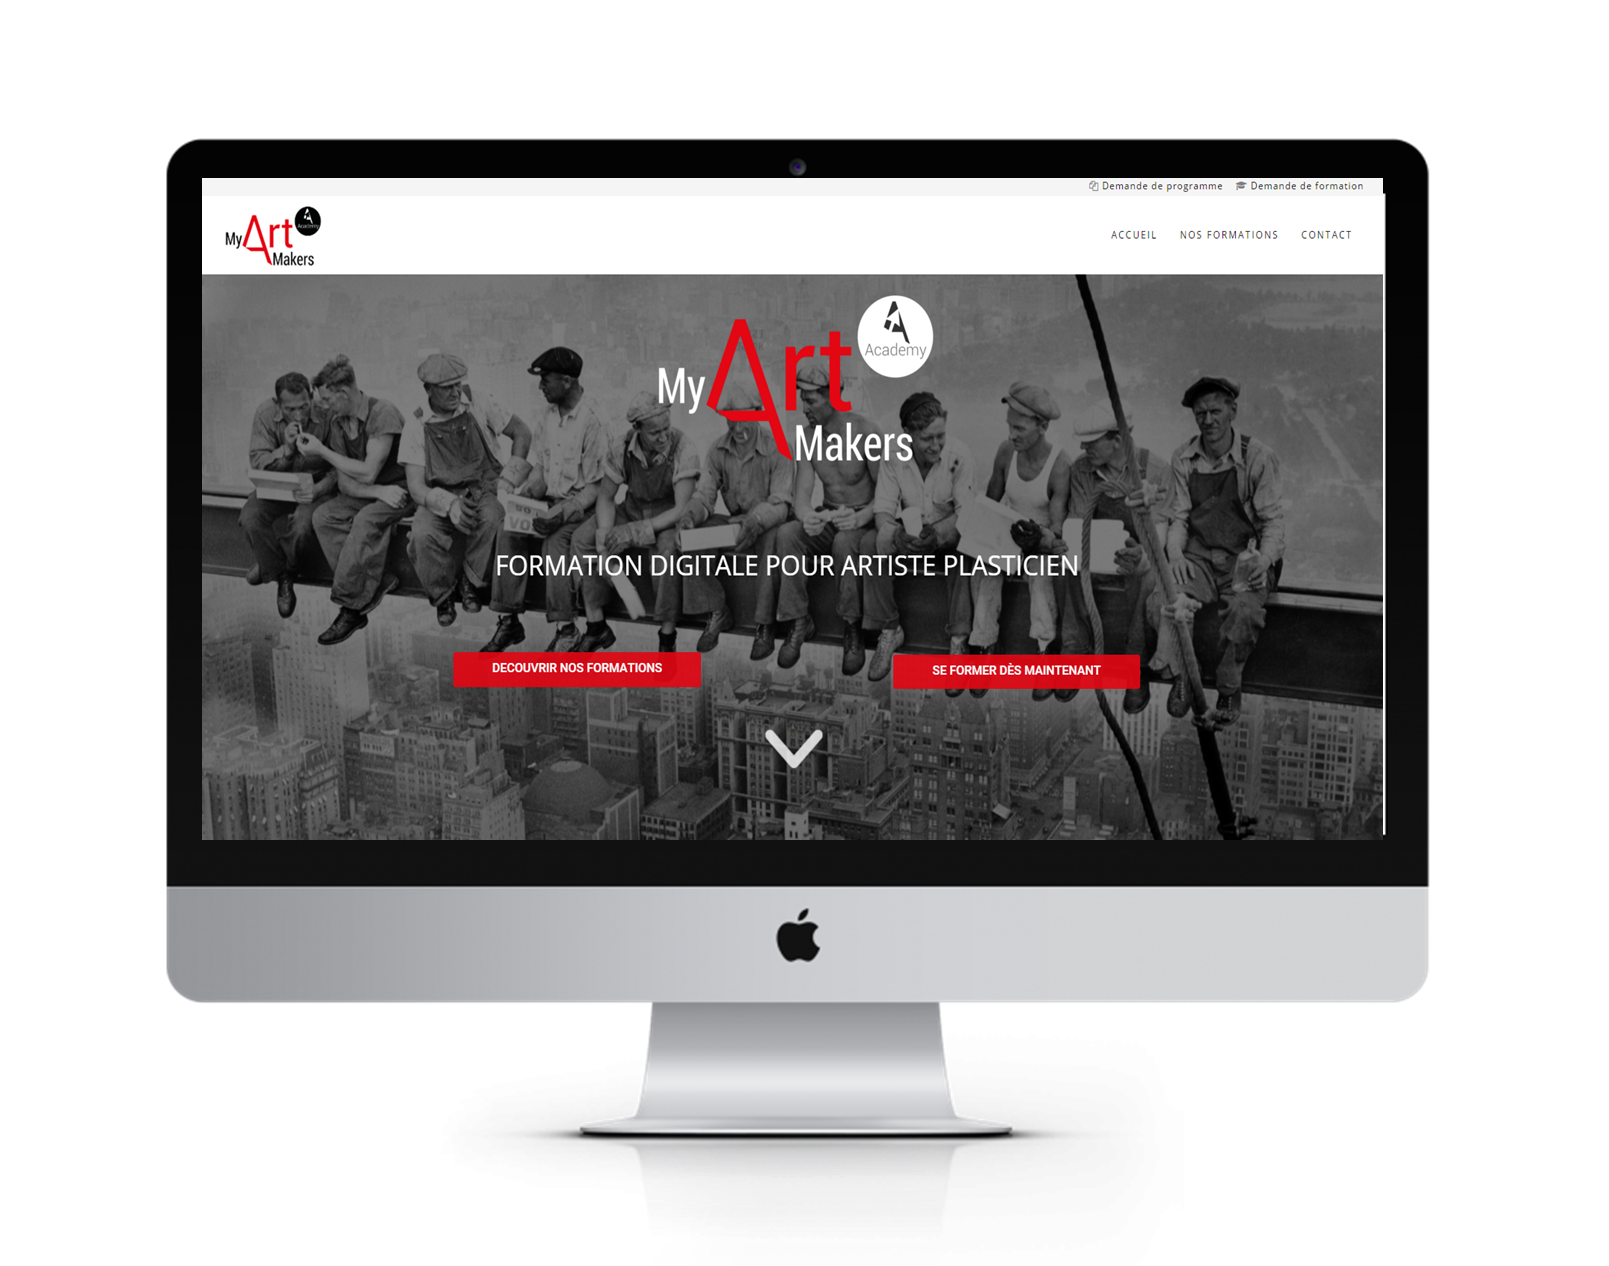 academy myartmakers_site internet_Le Web Francais